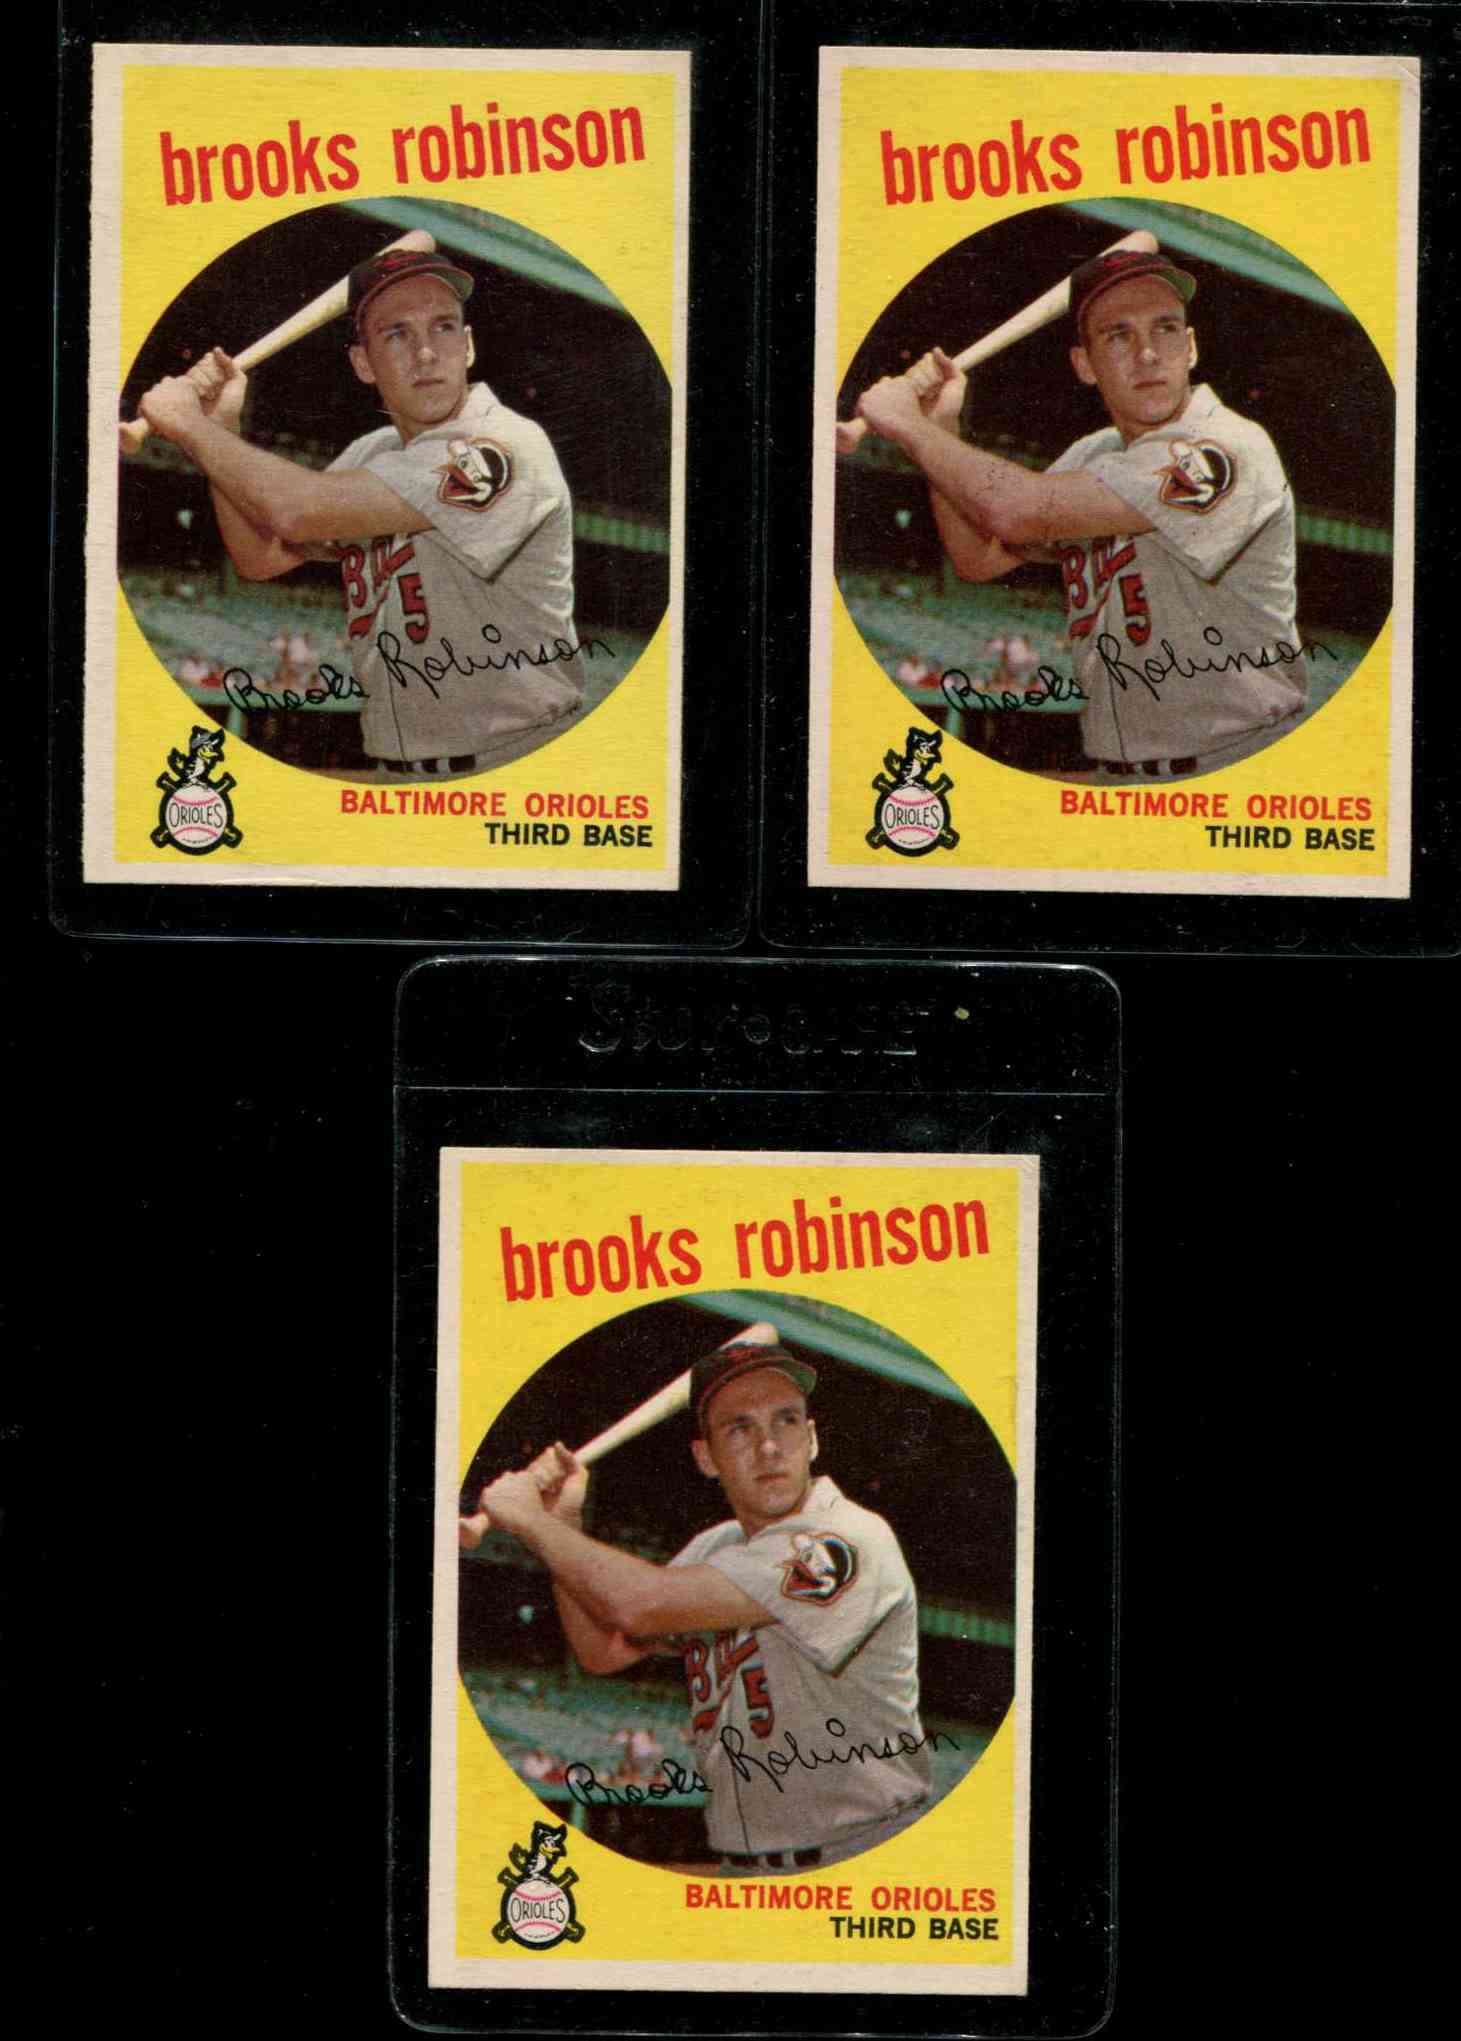 1959 Topps #439 Brooks Robinson [#] (Orioles) Baseball cards value